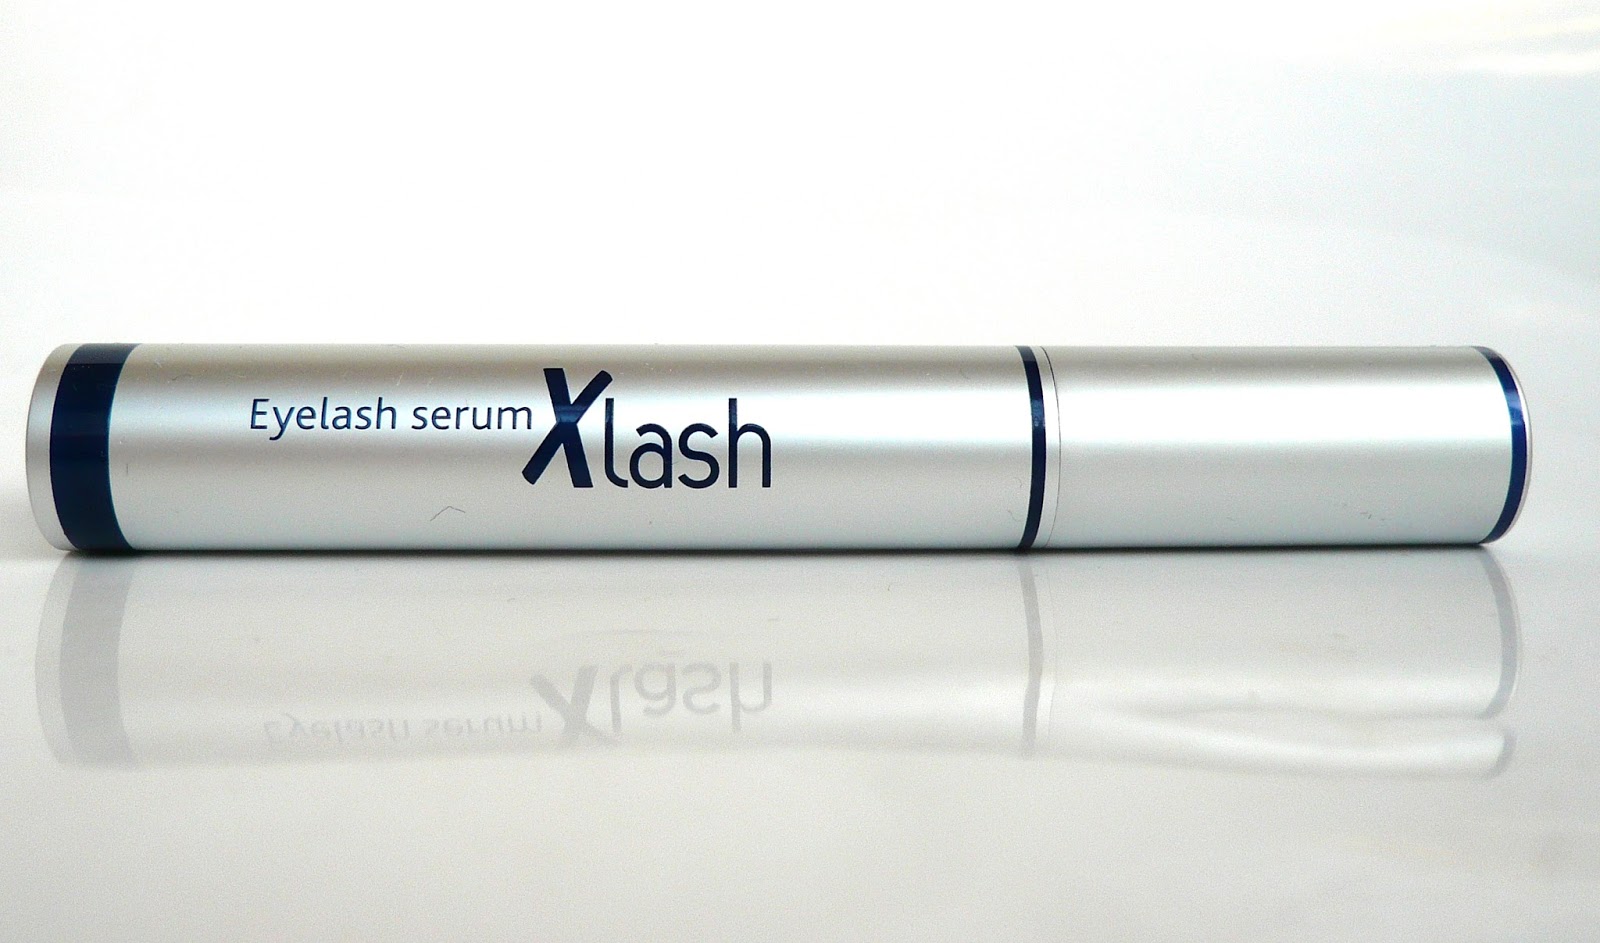 Eyelash serum xlash. Eyelash Serum. Брошюра Xlash. Xlash таблица. Xlash отзывы.